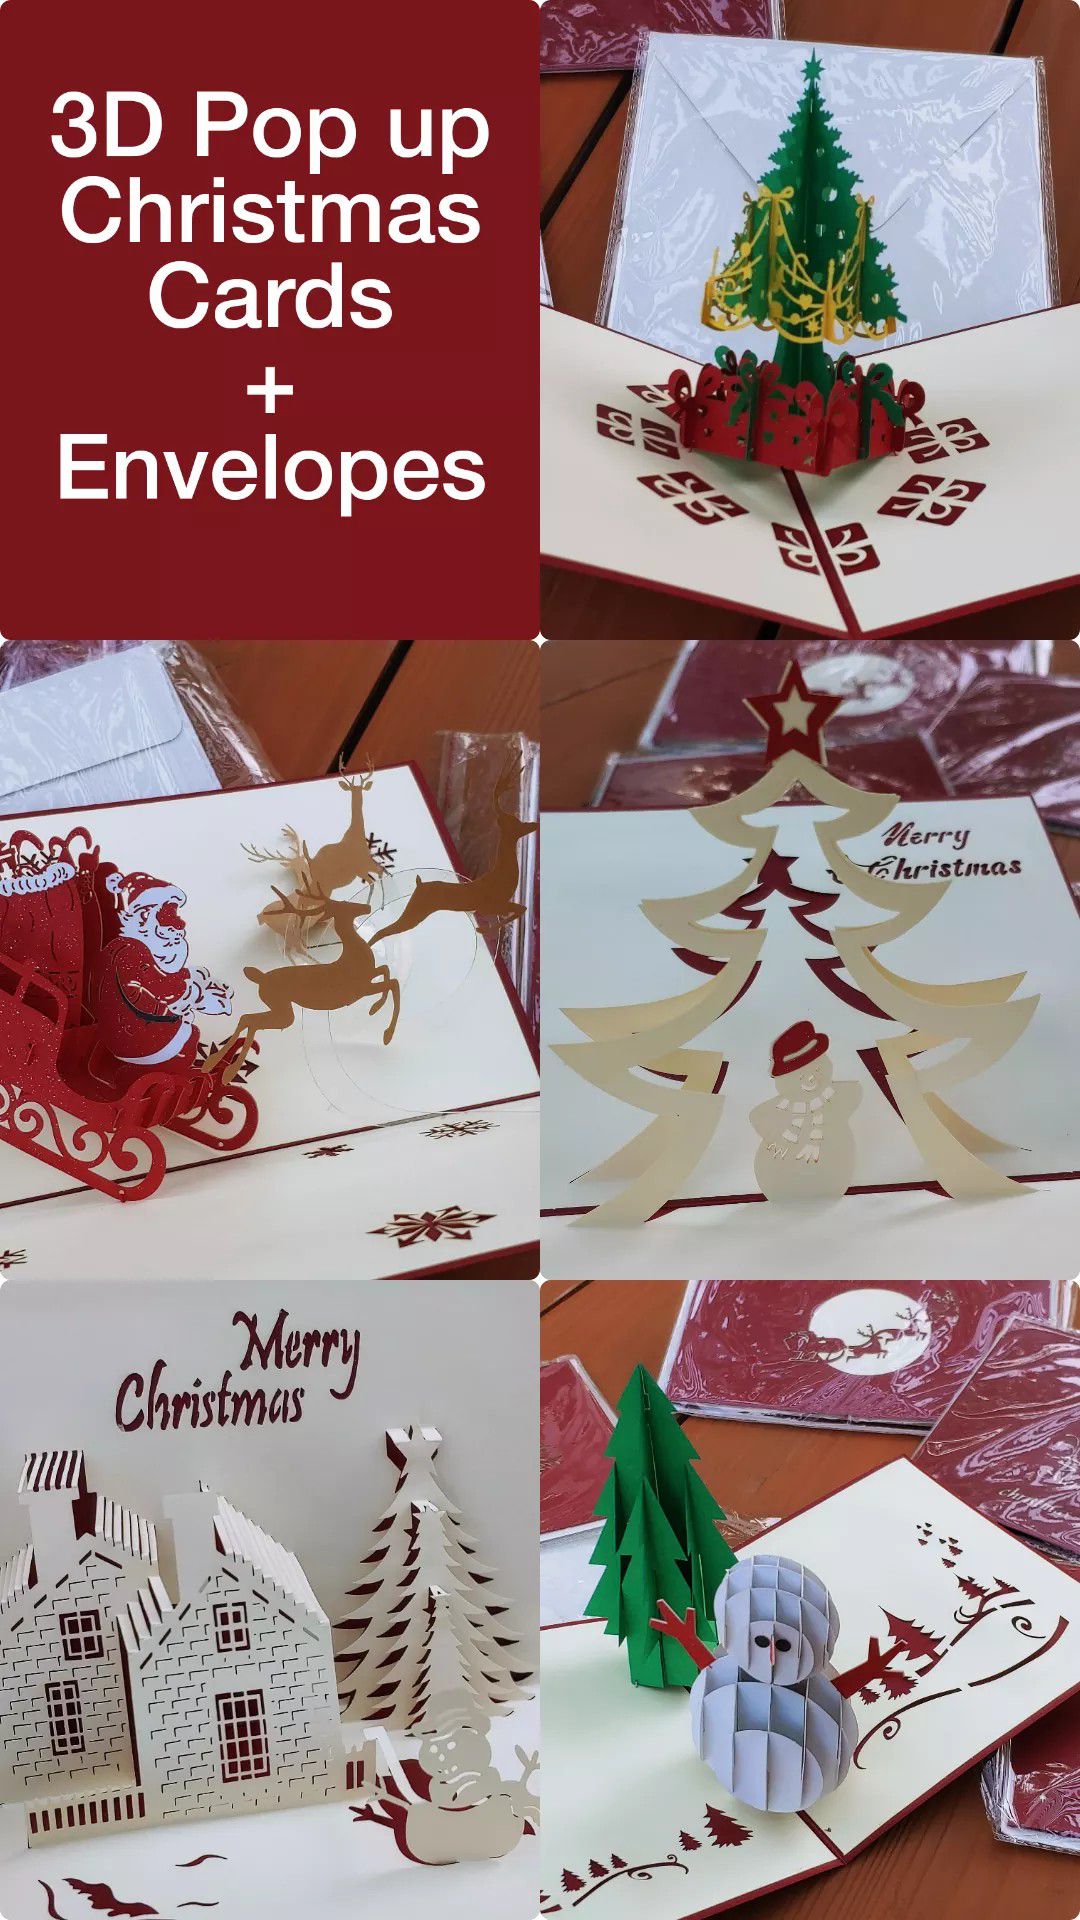 BRAND NEW Designer 3D Pop up Christmas Cards + Envelopes Xmas 3D Cutout Cards Christmas Tree Snowman Santa Sleigh with reindeer winter wonderland gift